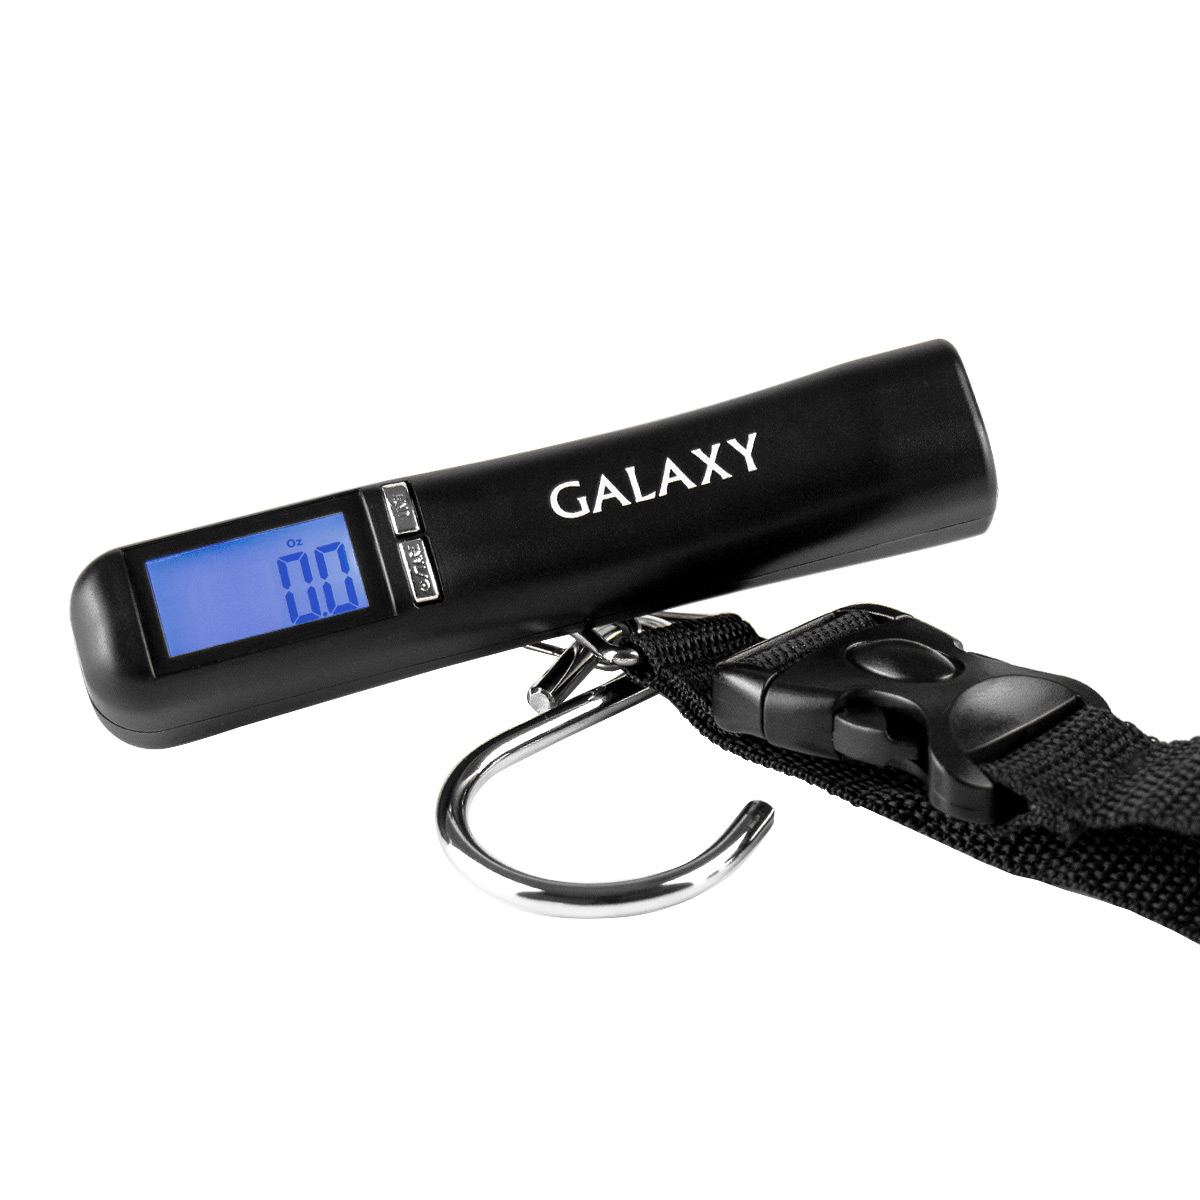 Безмен электронный Galaxy GL 2830, до 40 кг, 2хААА, ЖК-дисплей (40/уп)